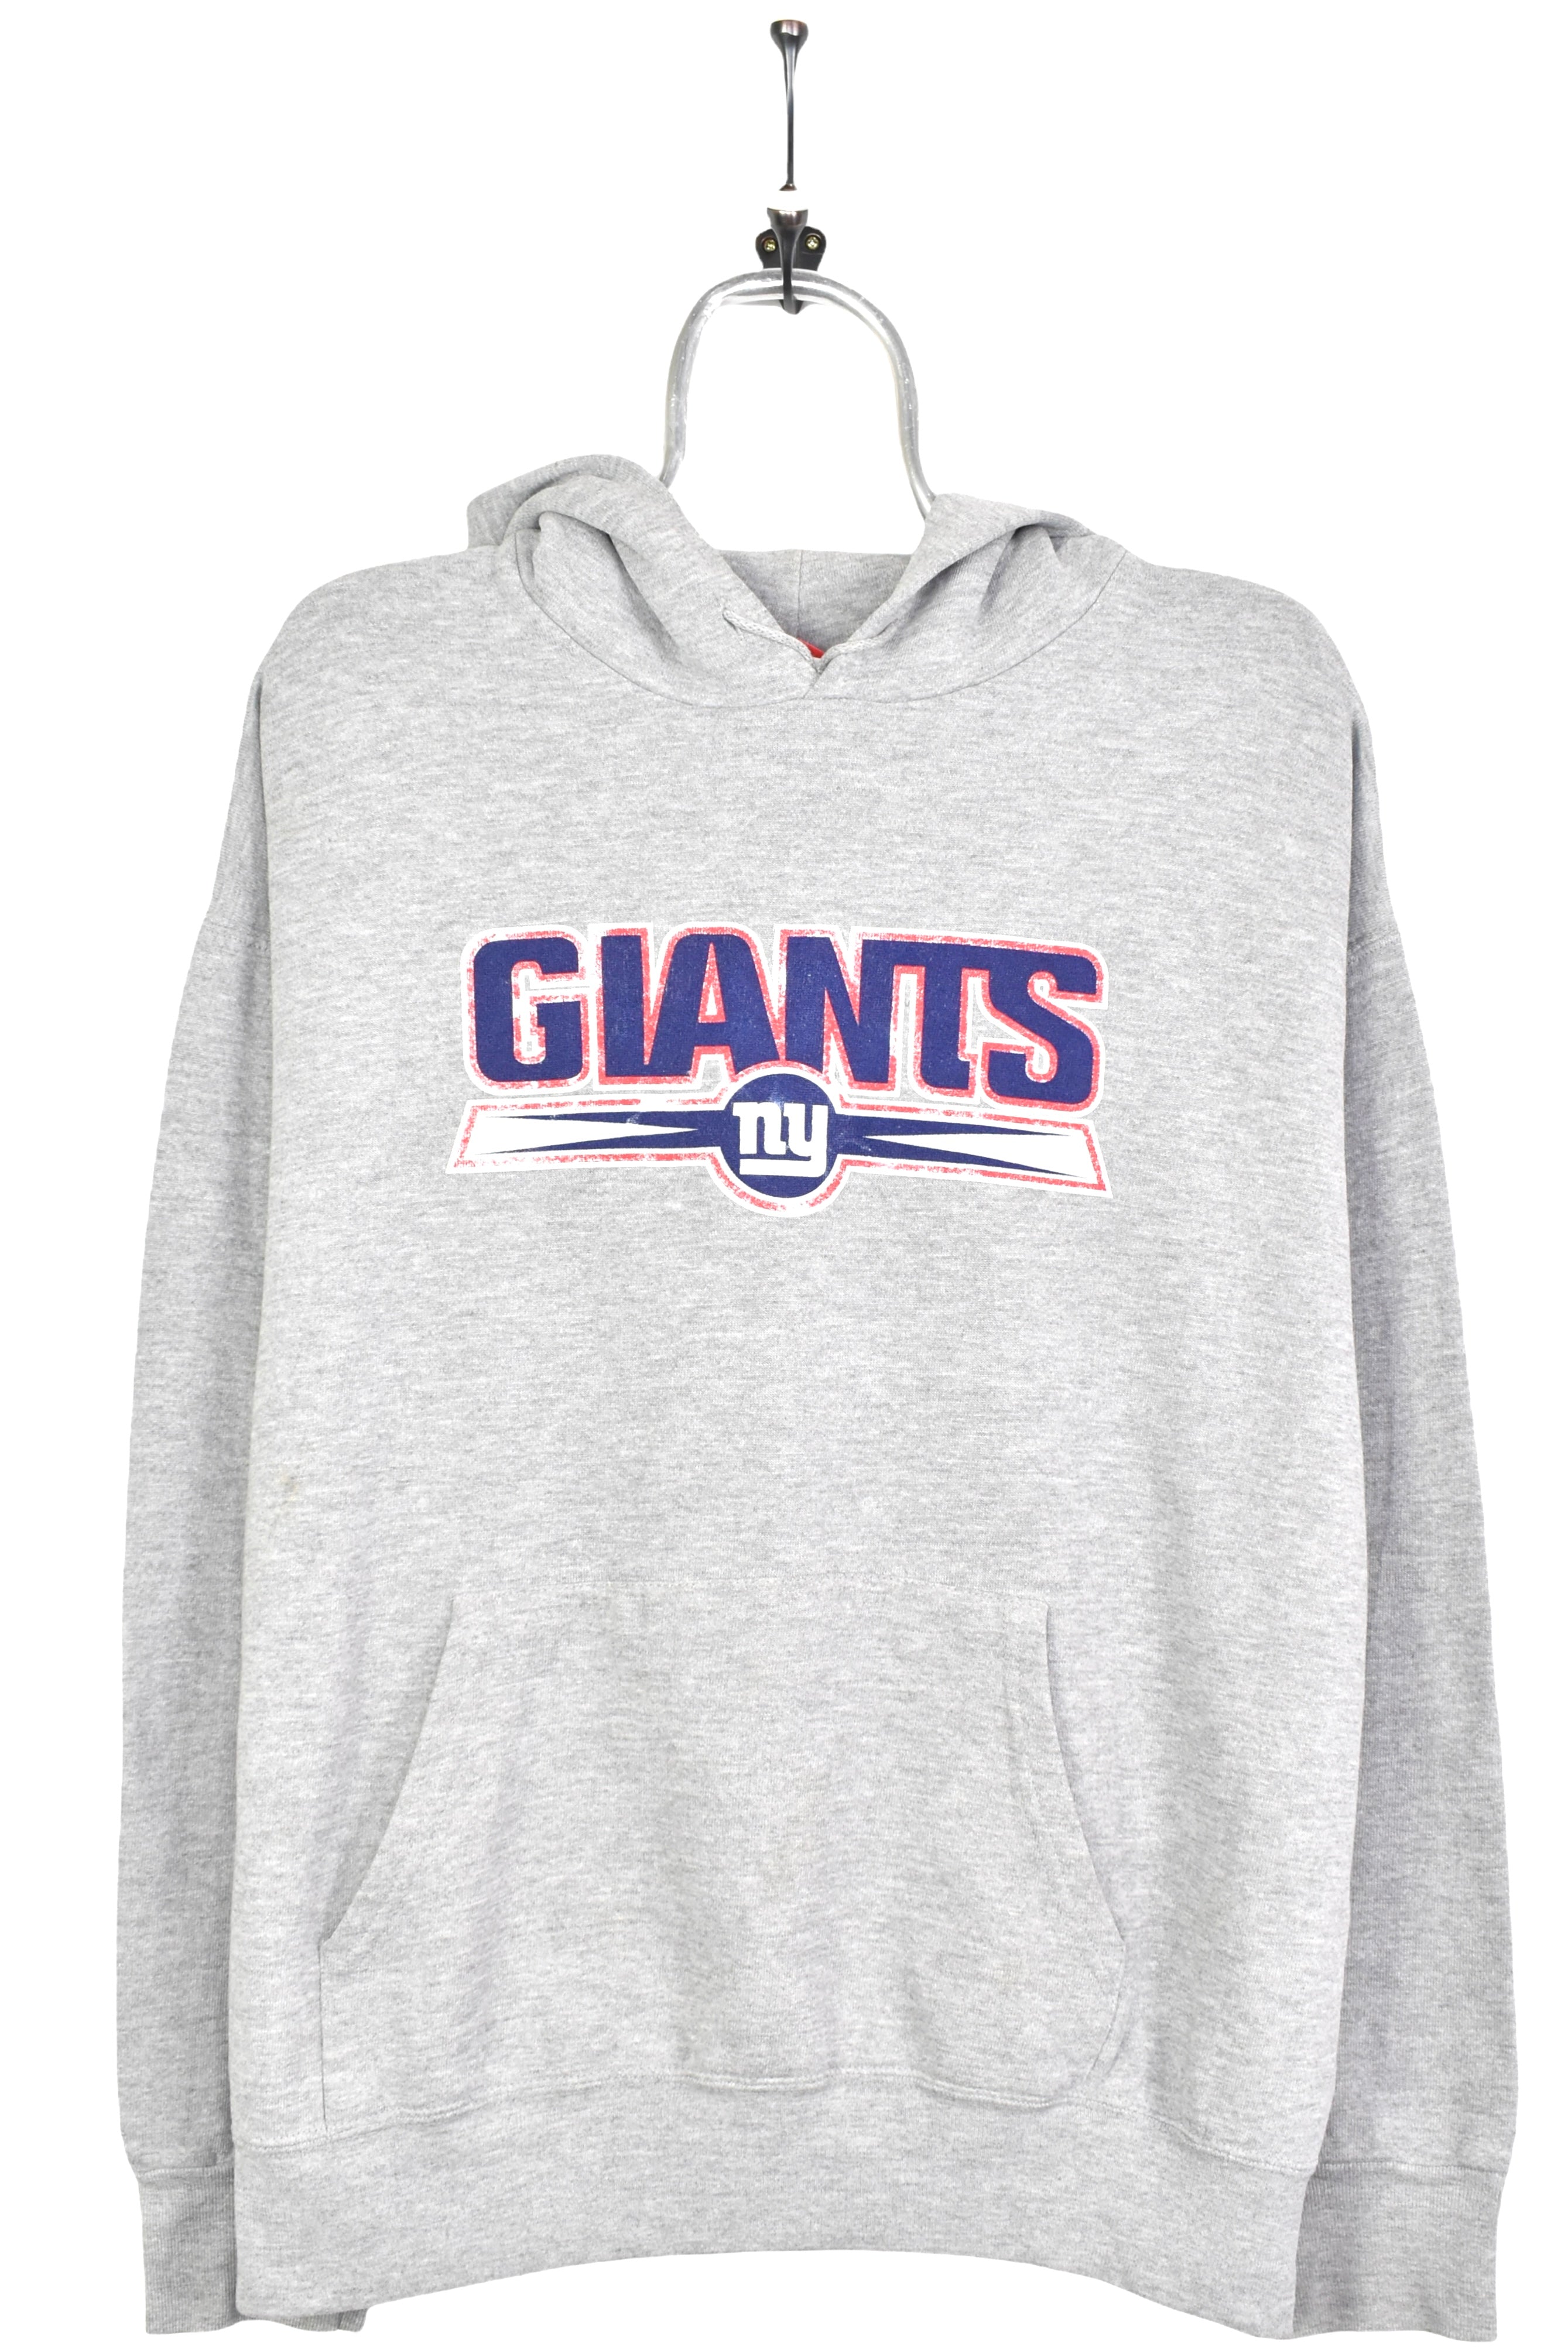 Vintage New York Giants hoodie, NFL graphic sweatshirt - XL, grey PRO SPORT